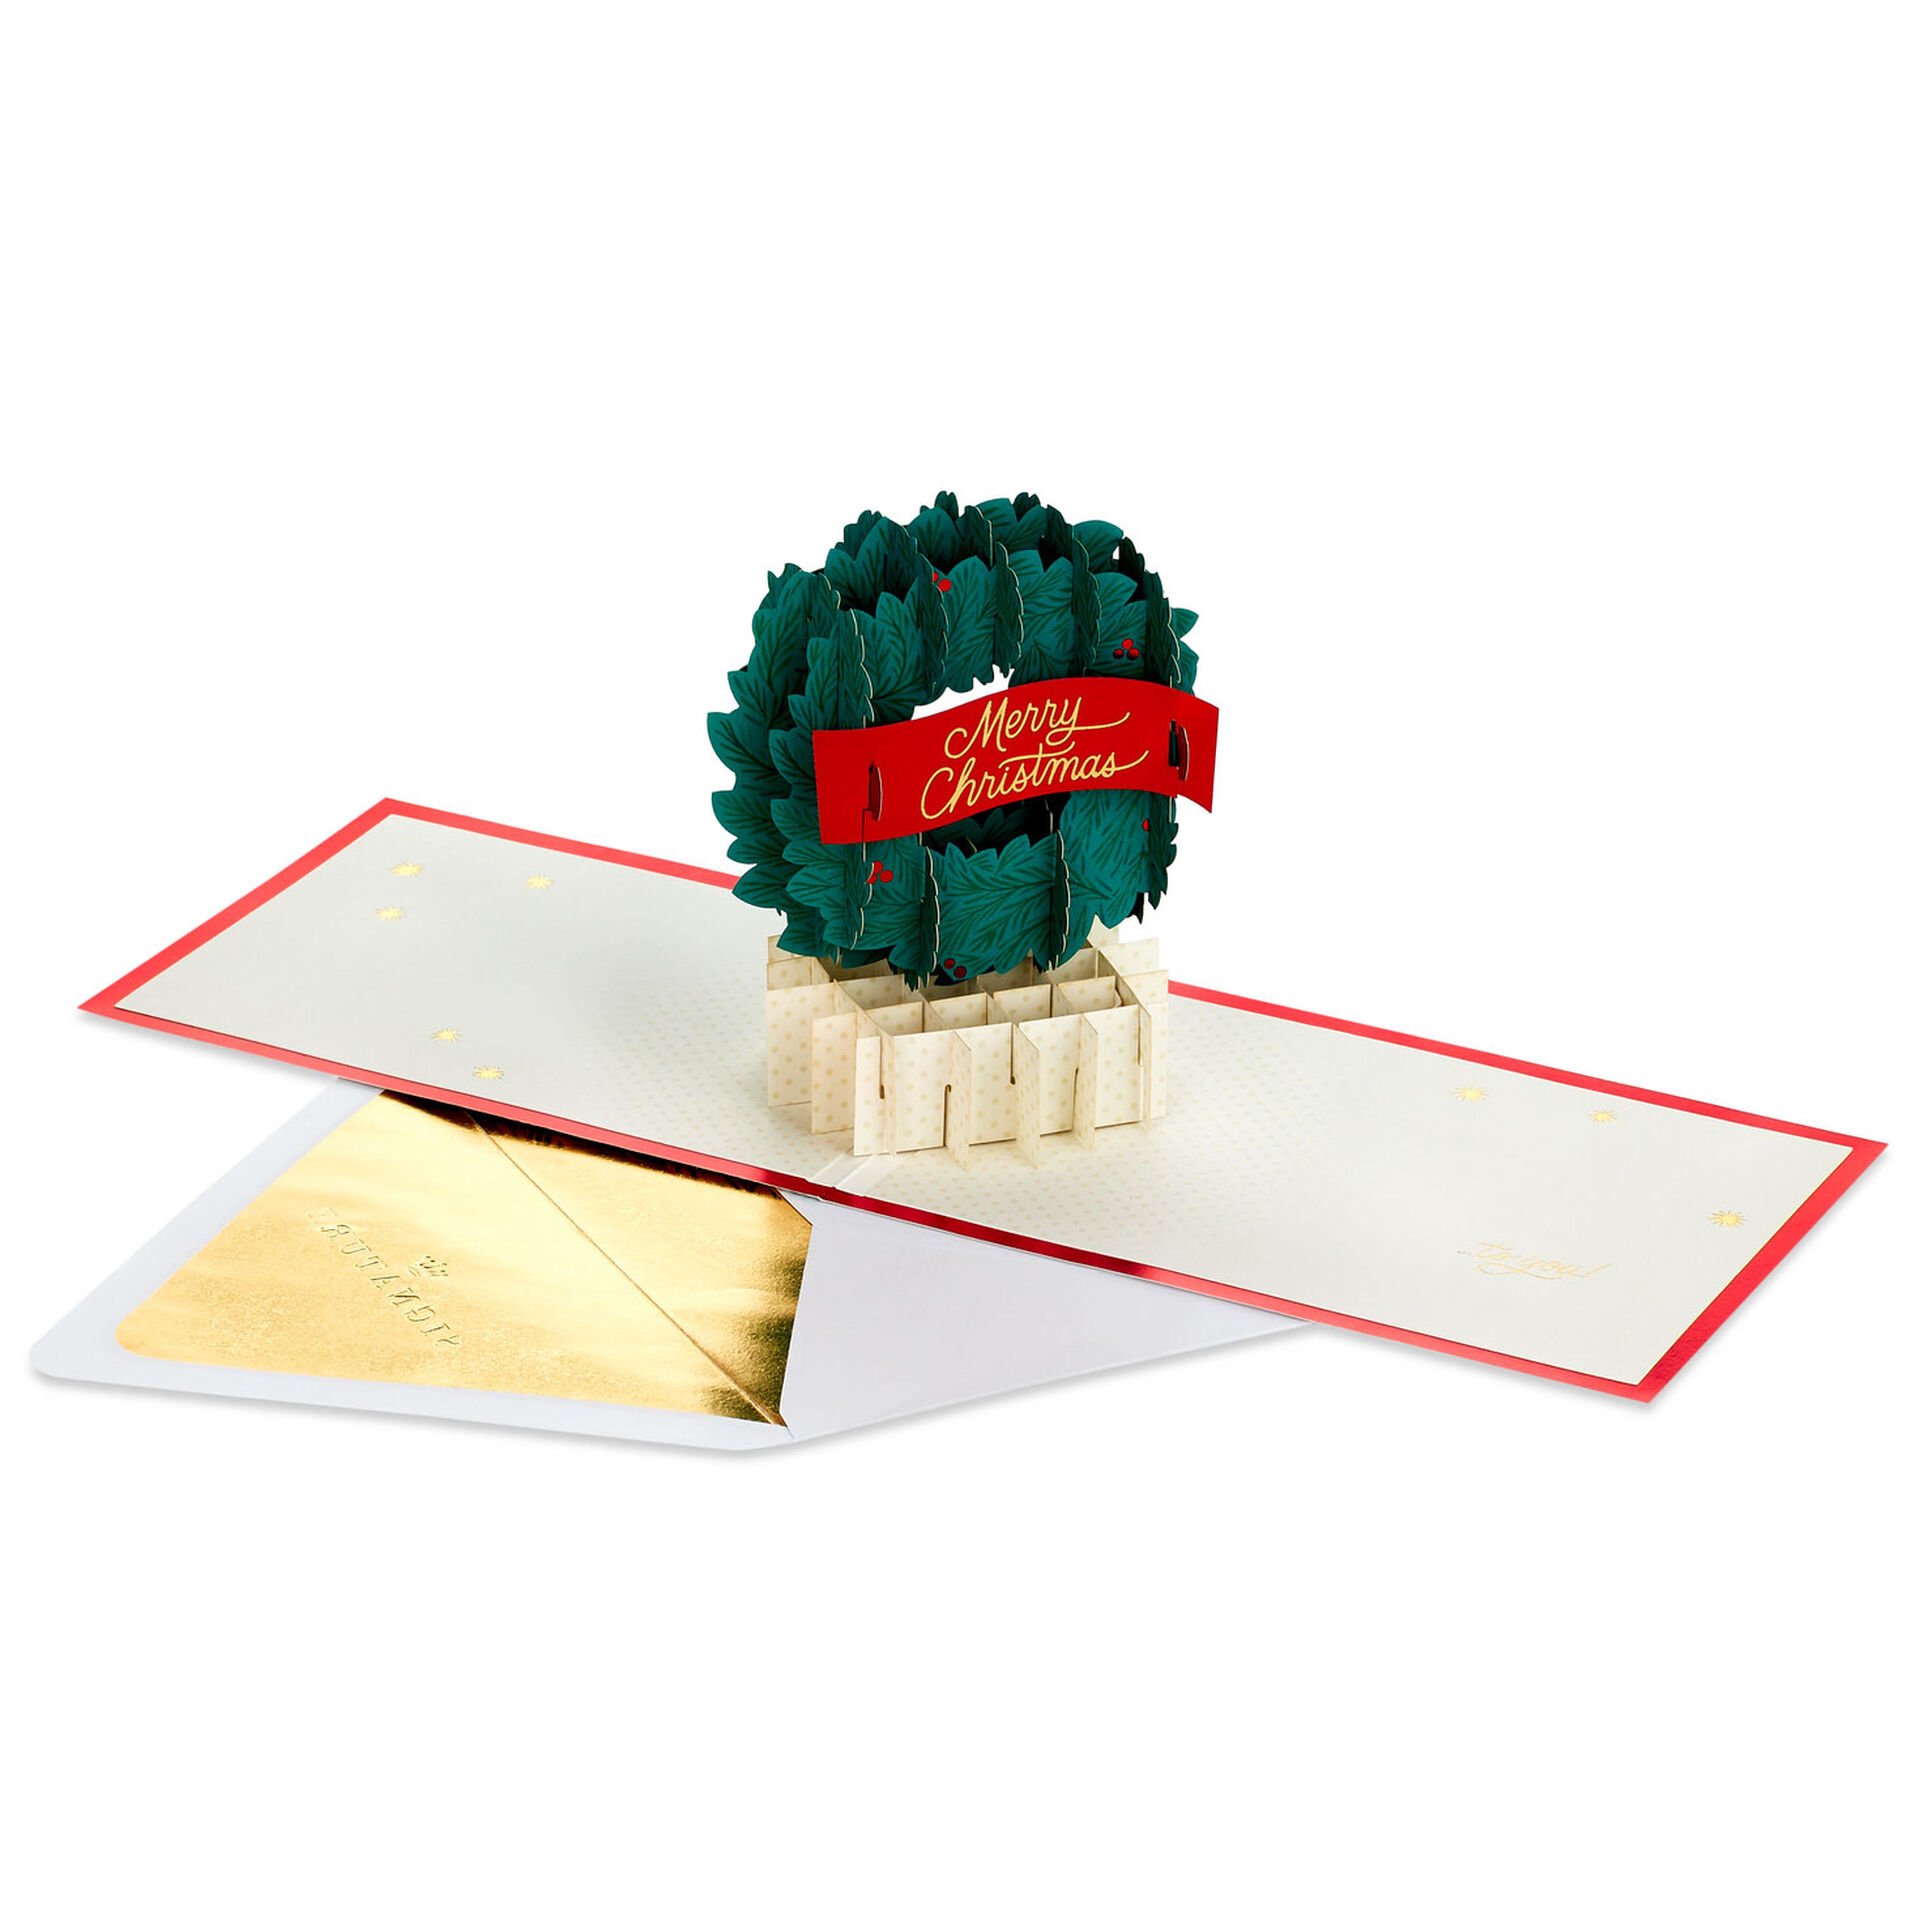 Merry-Christmas-Wreath-3D-PopUp-Christmas-Card_1299IXC3056_02.jpeg